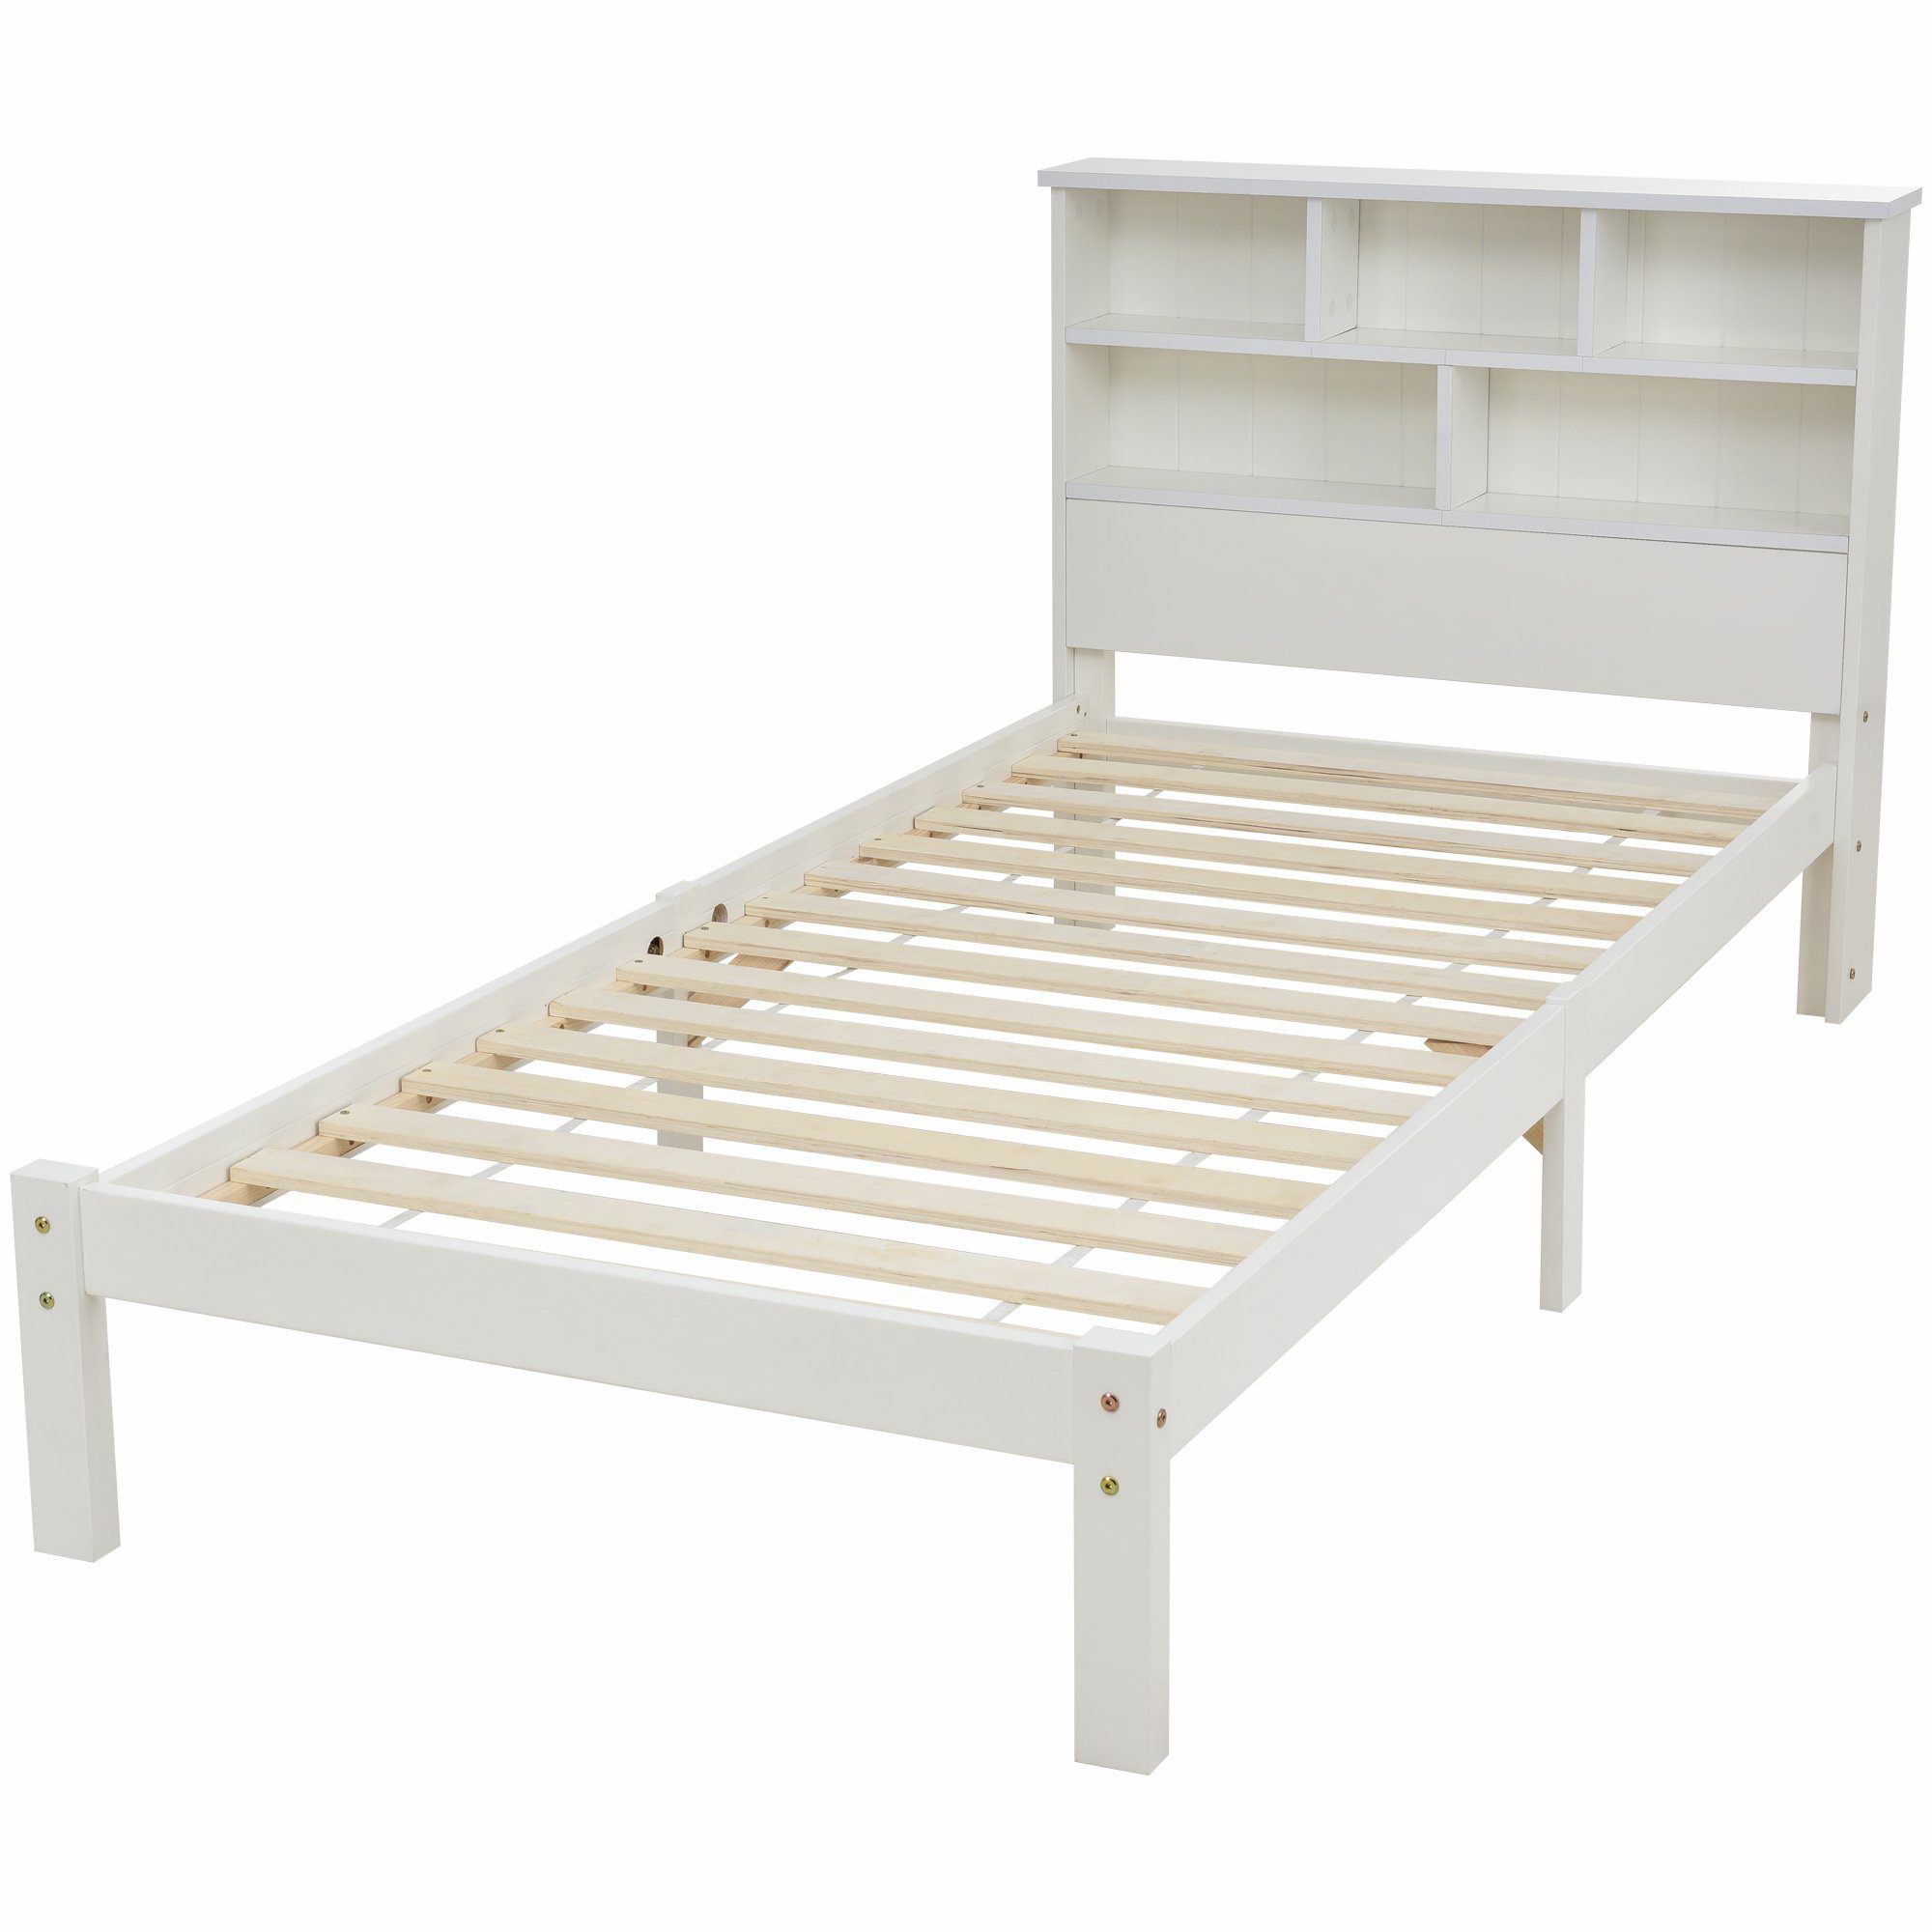 Schubladen+Lattenrost Doppelbett Holzbett Holz mit Bücherregal Kinderbett Weiß Gotagee